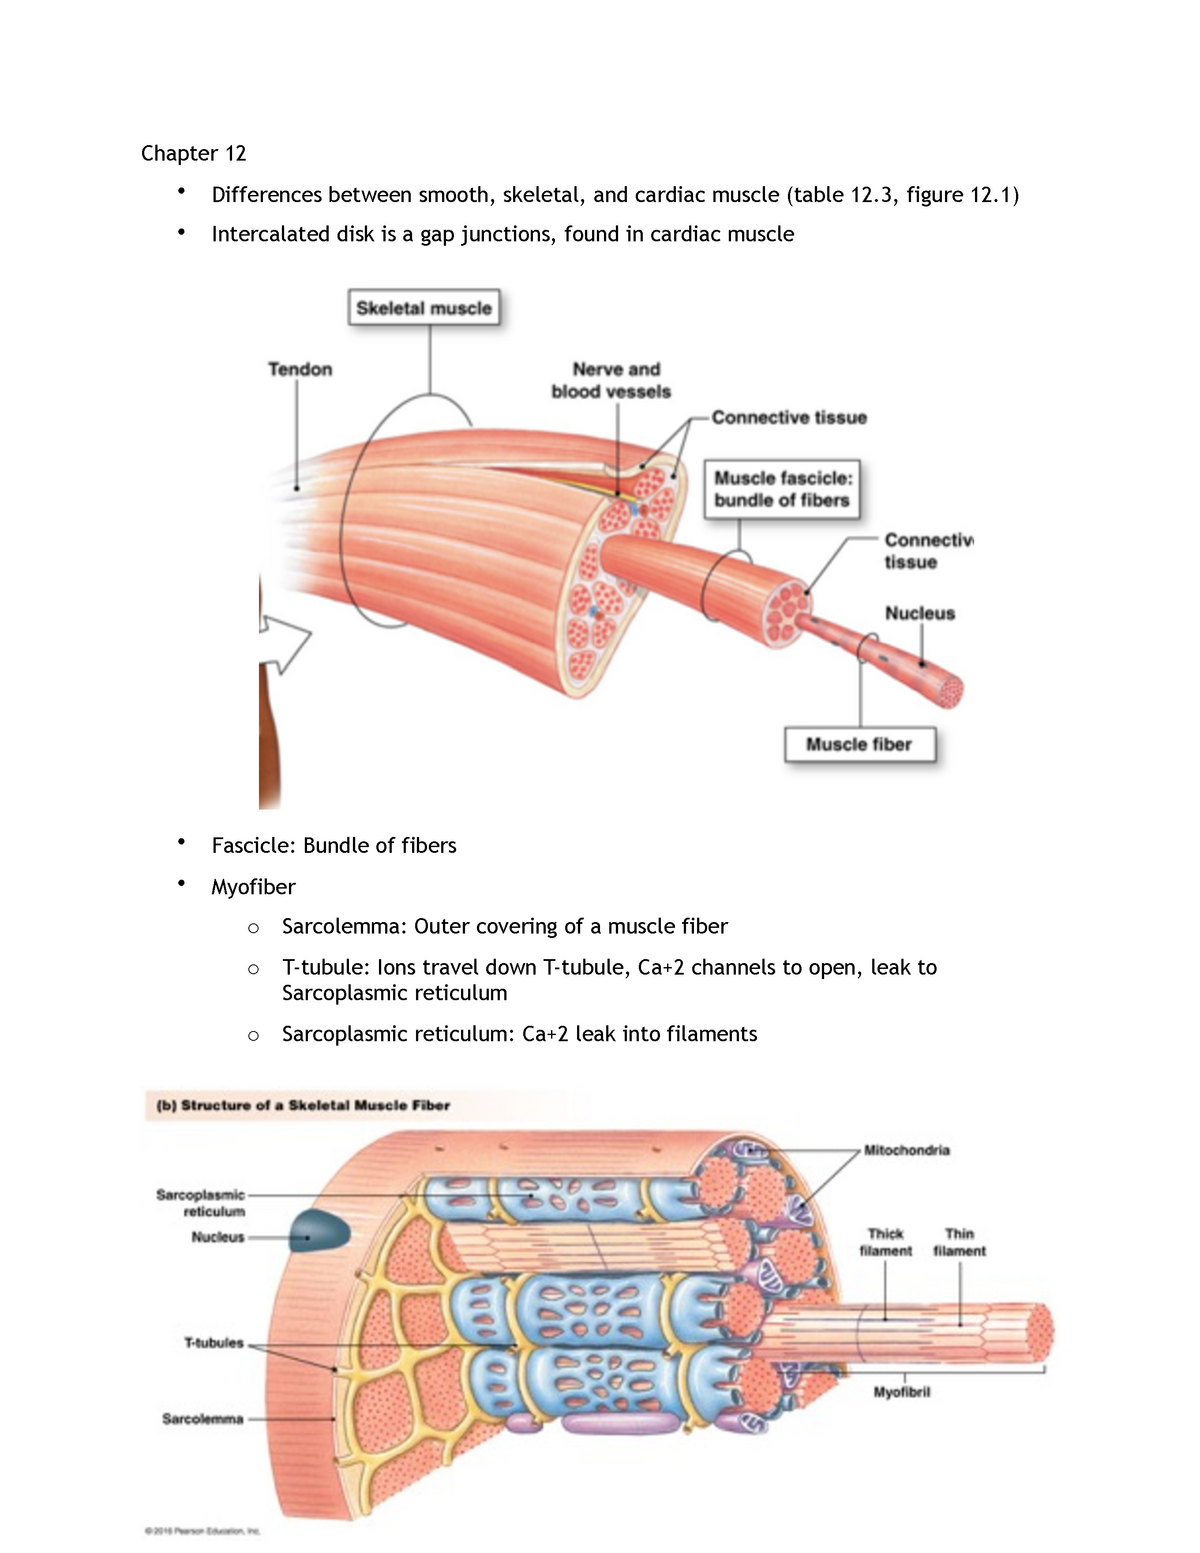 gap junction in cardiac muscle